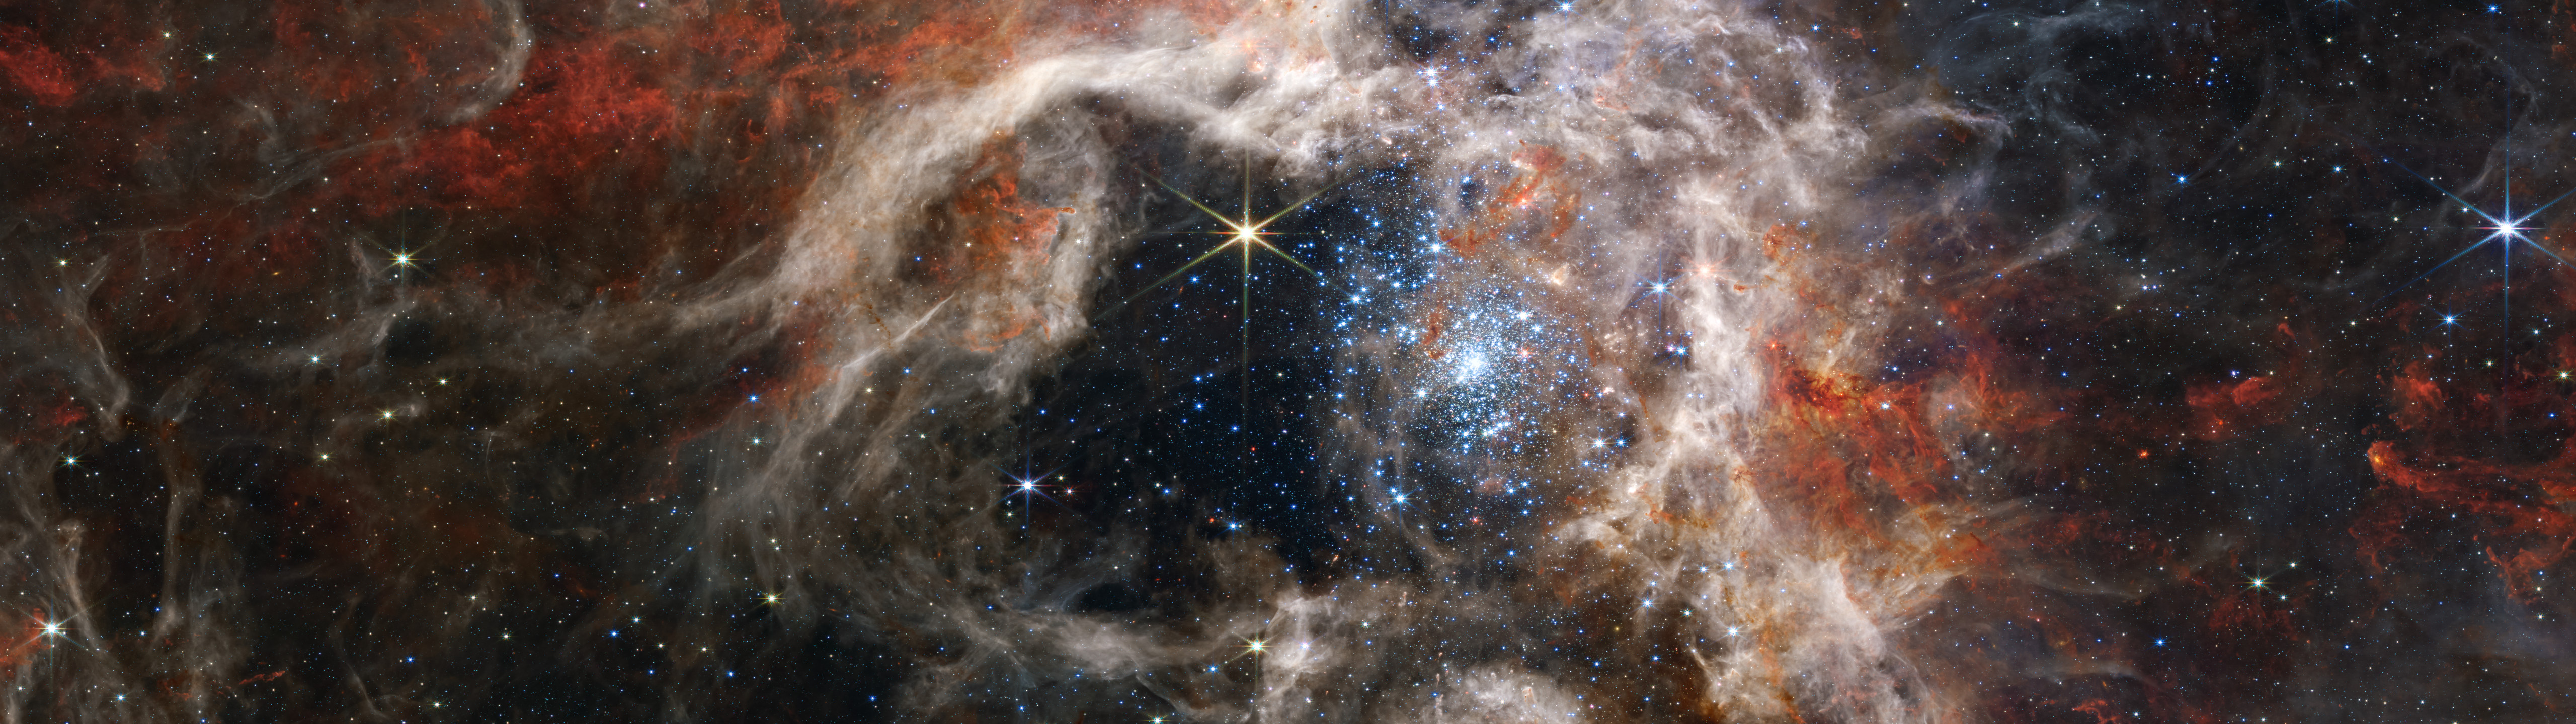 James Webb Space Telescope Science Ultrawide Super Ultra Wide Space Stars Infrared Tarantula Nebula  5120x1440